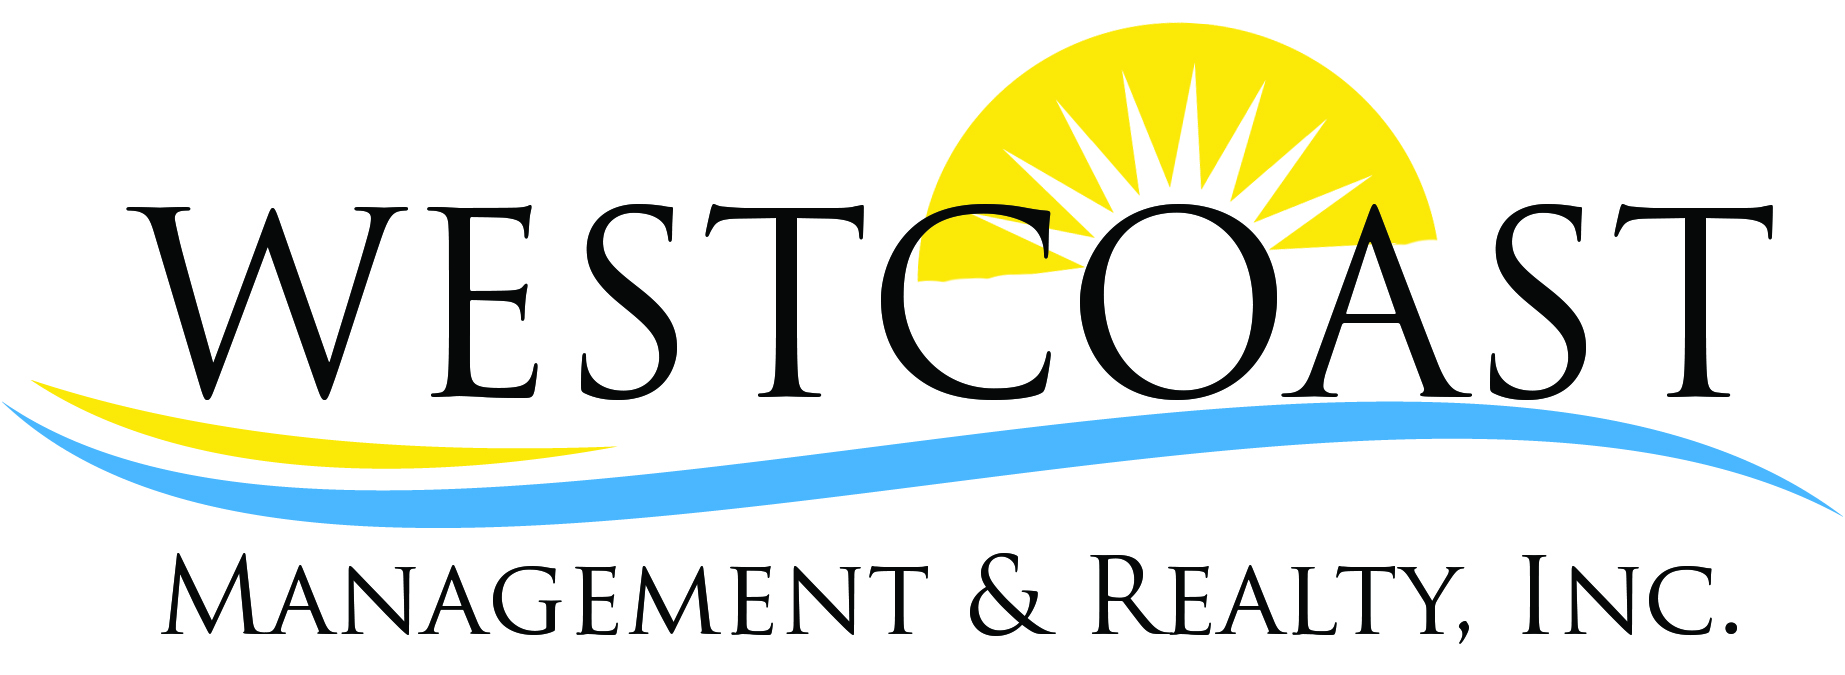 Westcoast Management and Realty, Inc. logo